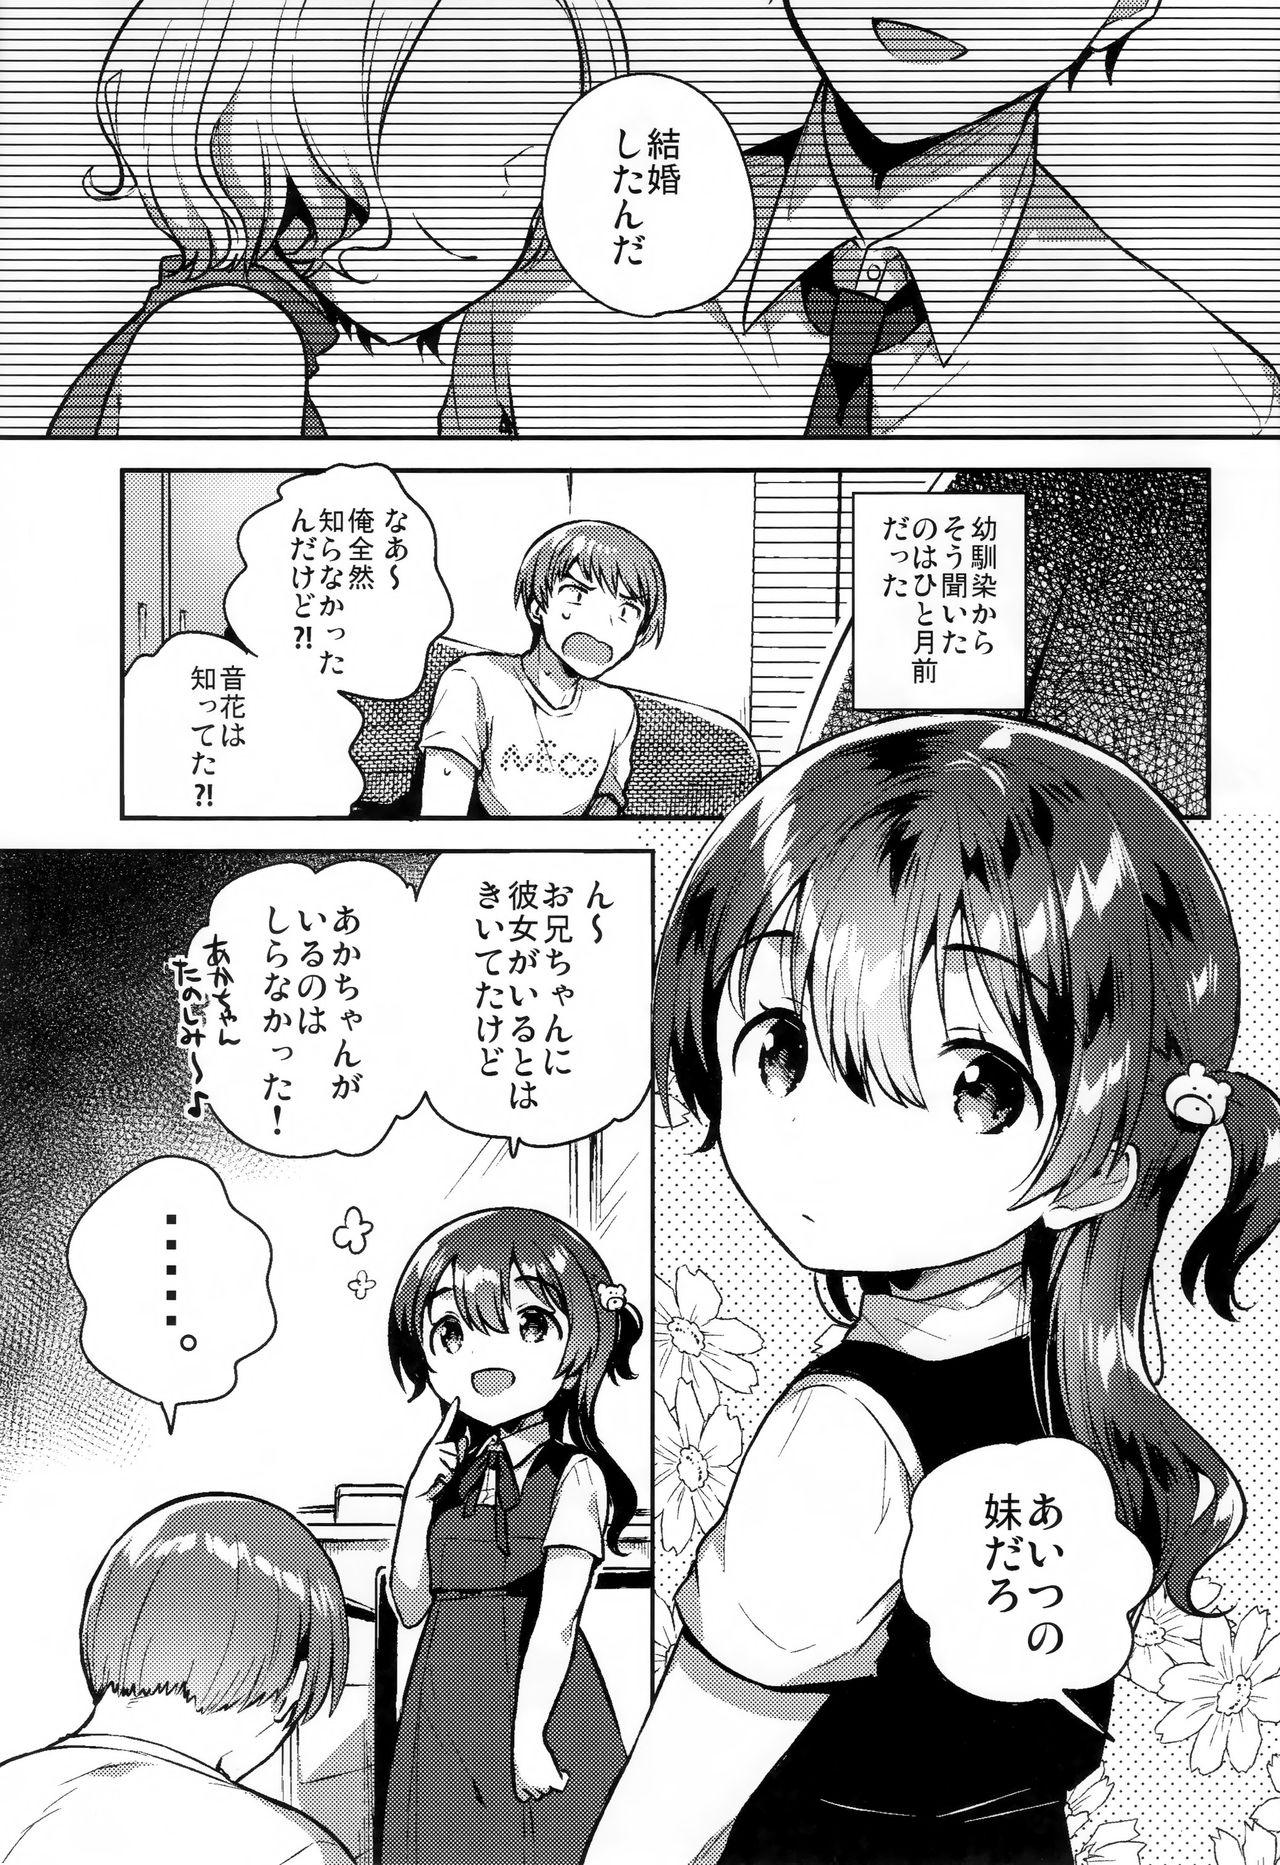 Chacal Kimi wa Otona ni Naranai - Original Amante - Page 2